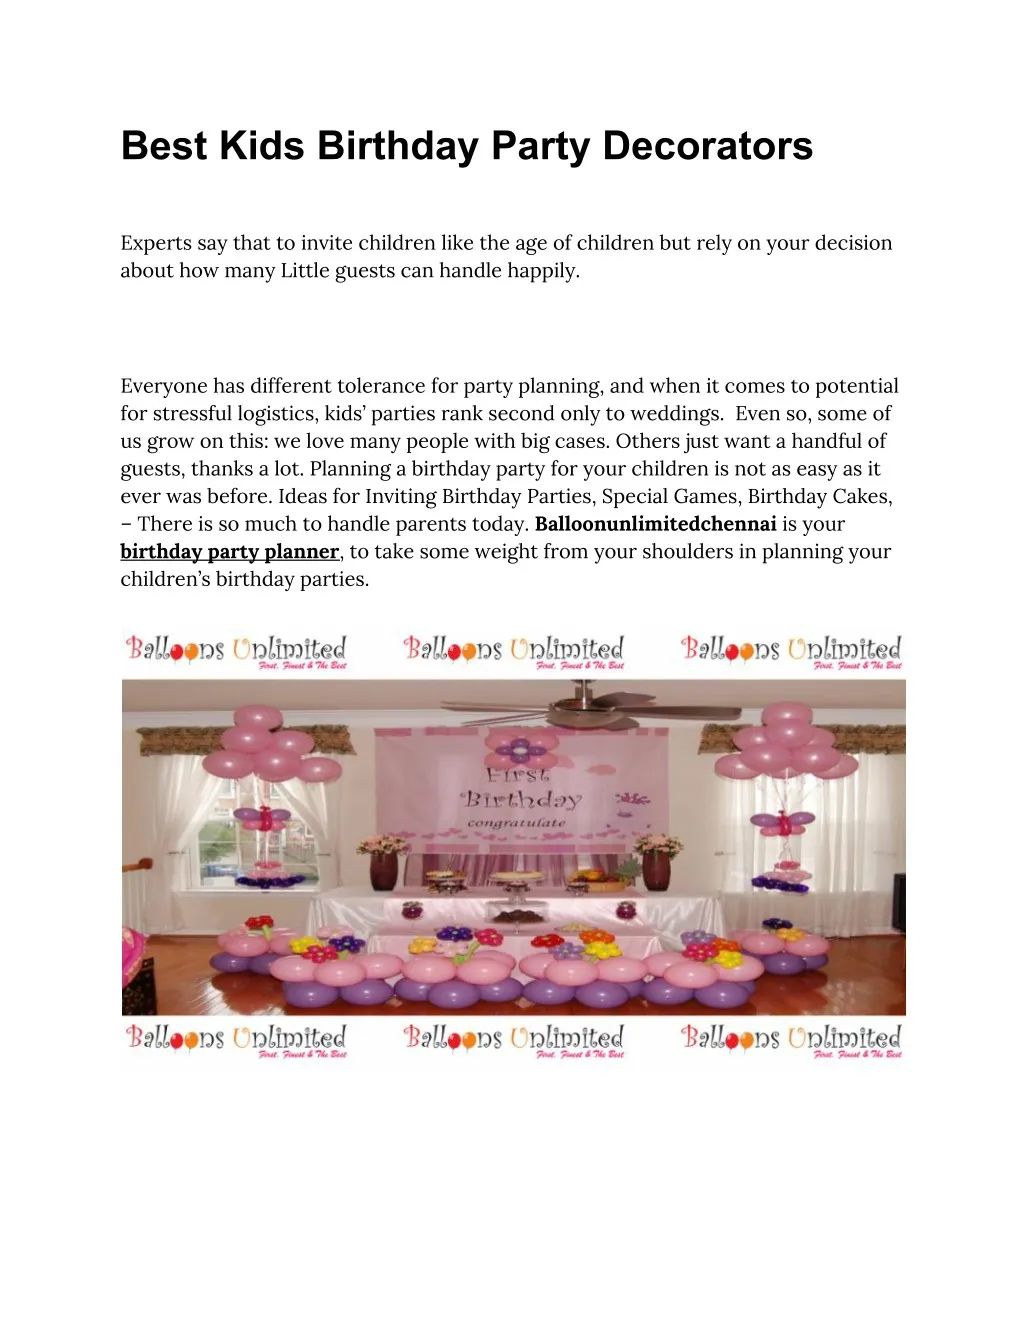 best kids birthday party decorators experts